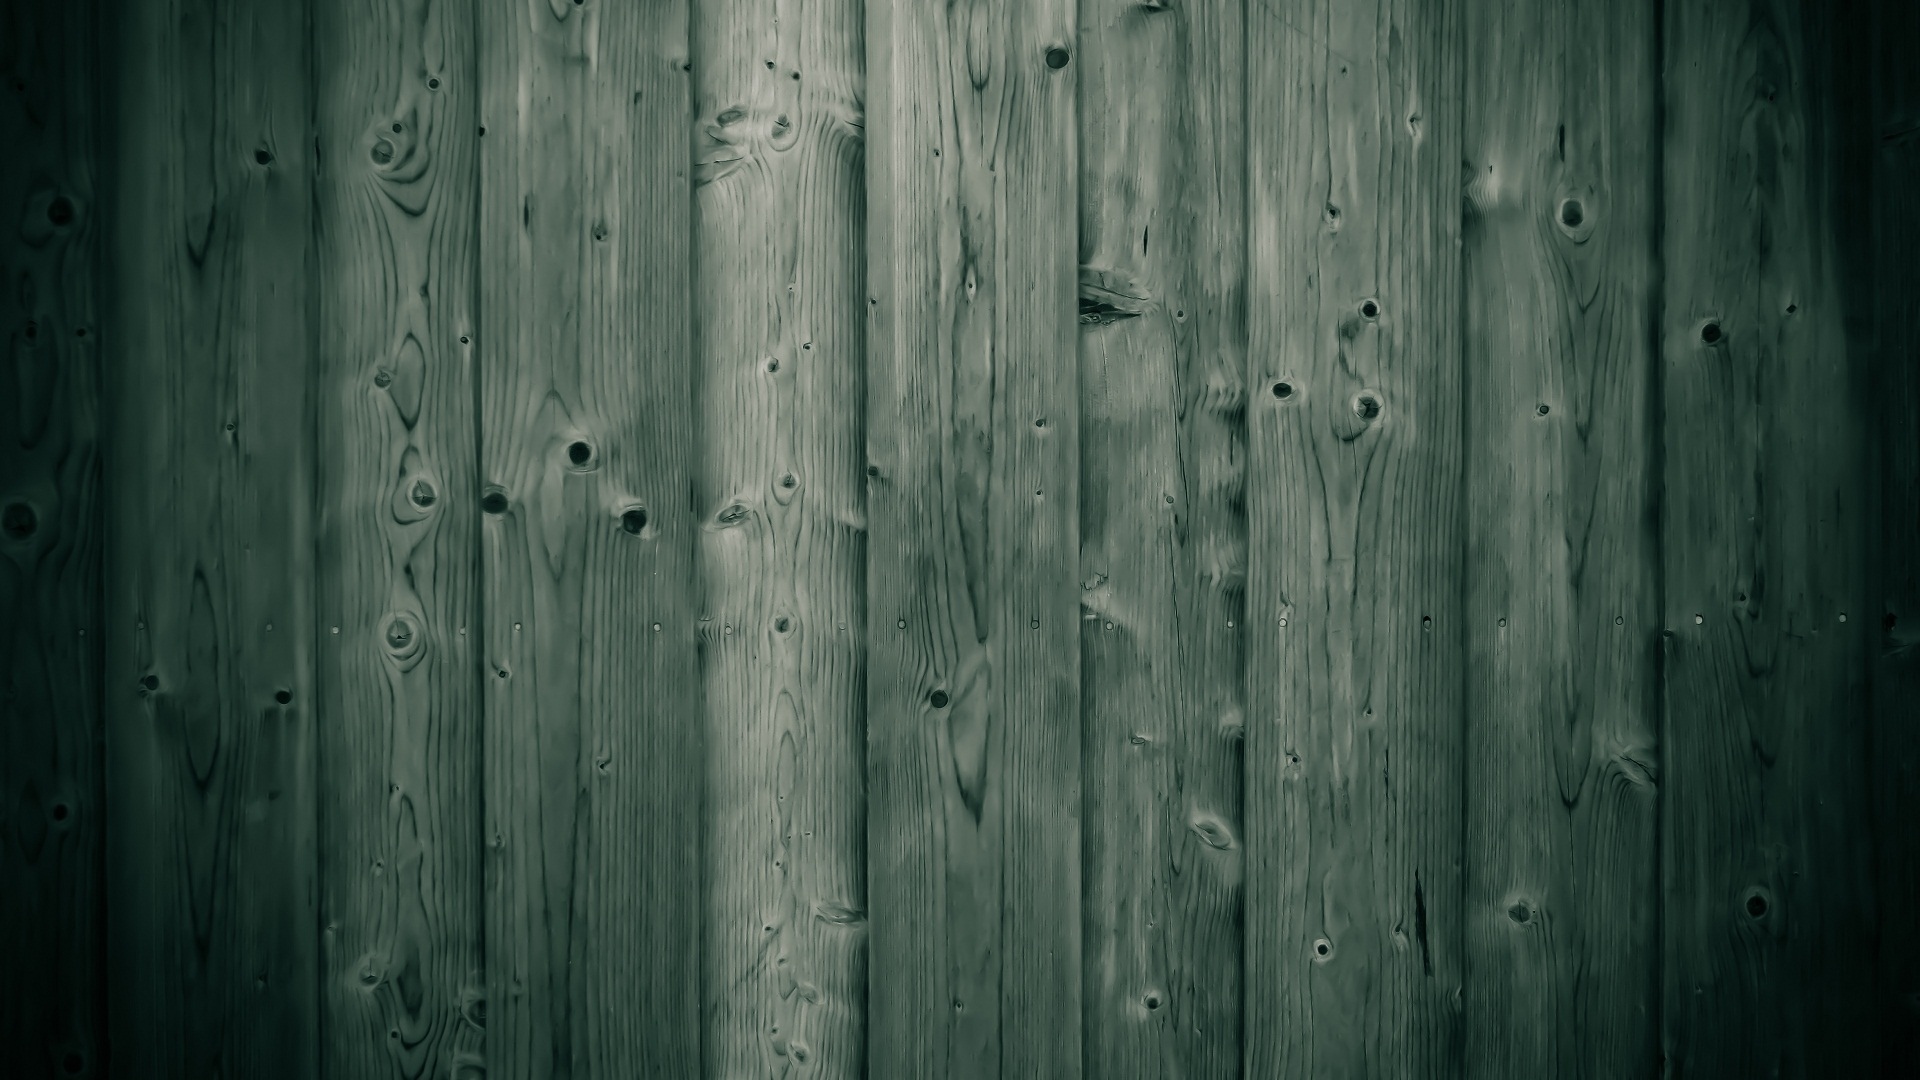  Wood  HD Wallpaper Background  Image 1920x1080  ID 